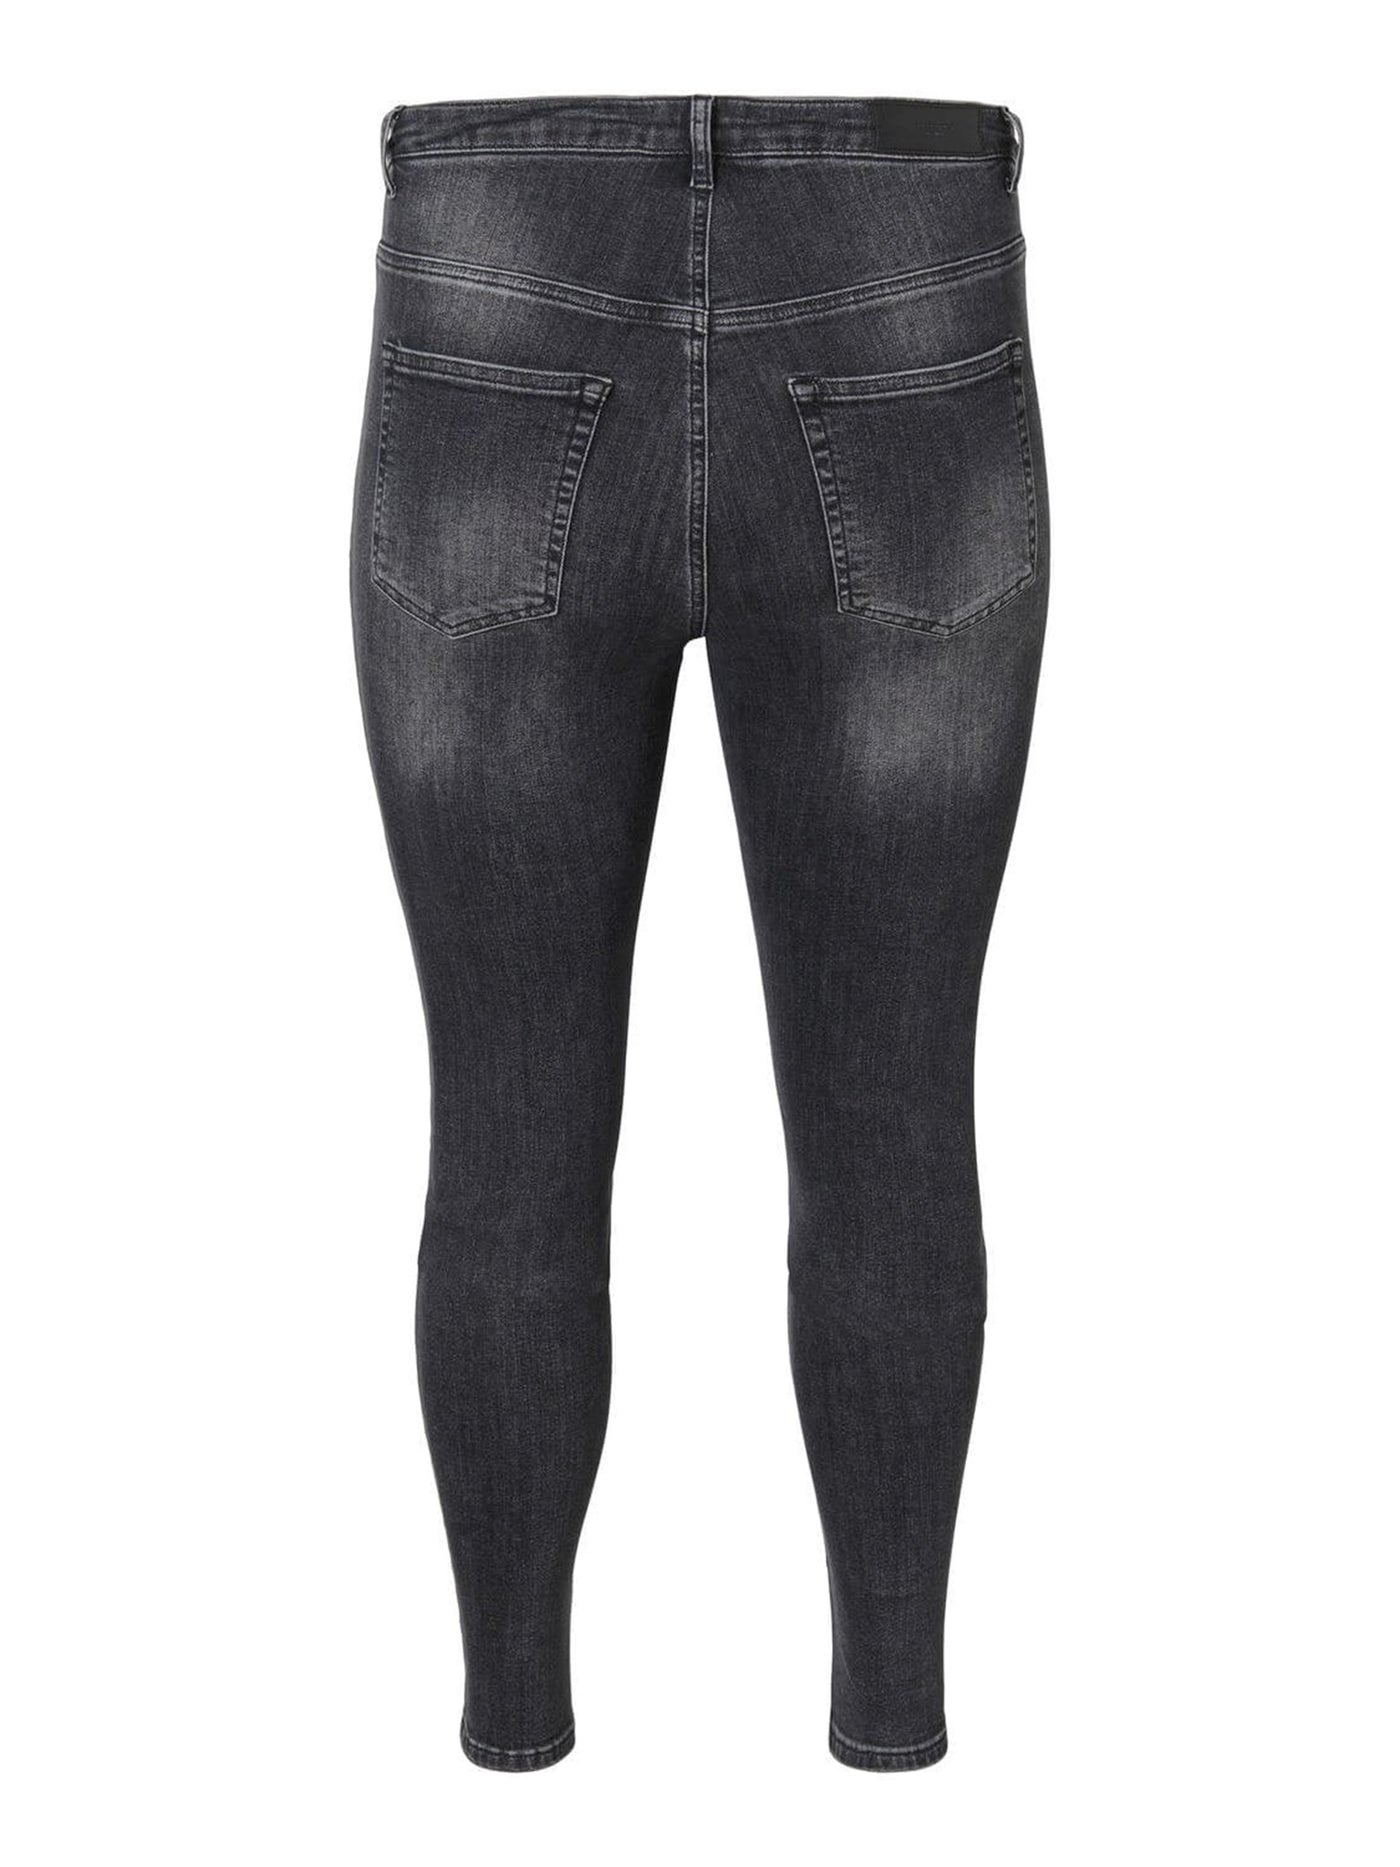 Lora Jeans high-waisted (Curve) - Black-grey denim - Vero Moda Curve - Black 2